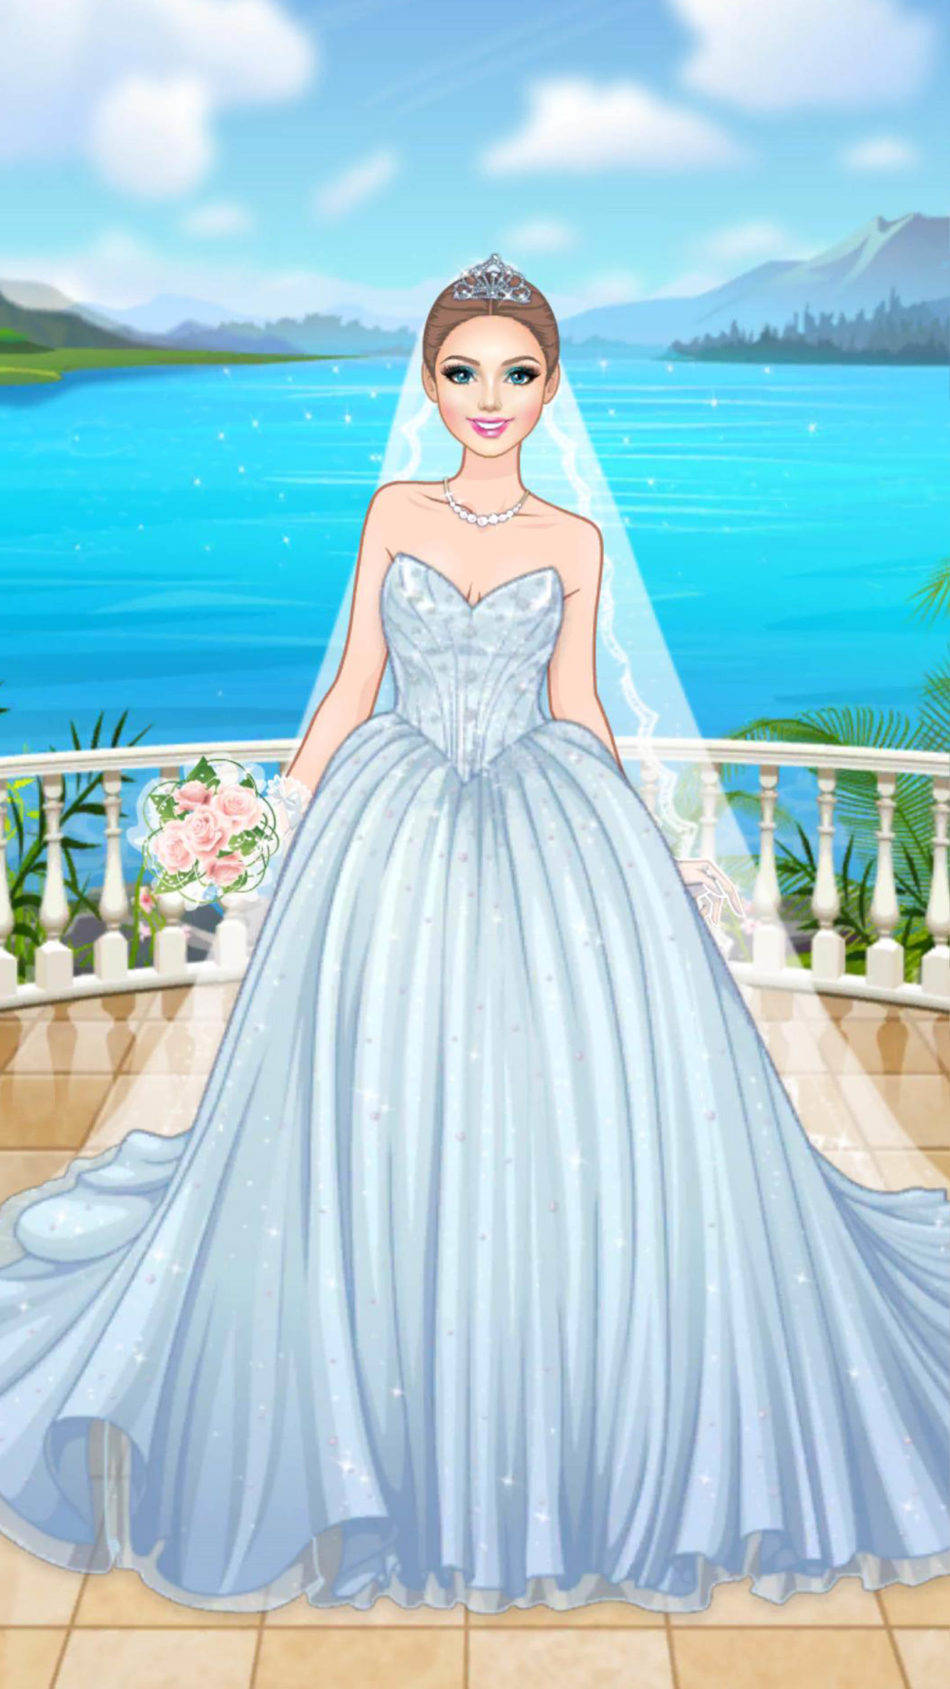 Barbie Blue Wedding Dress Background